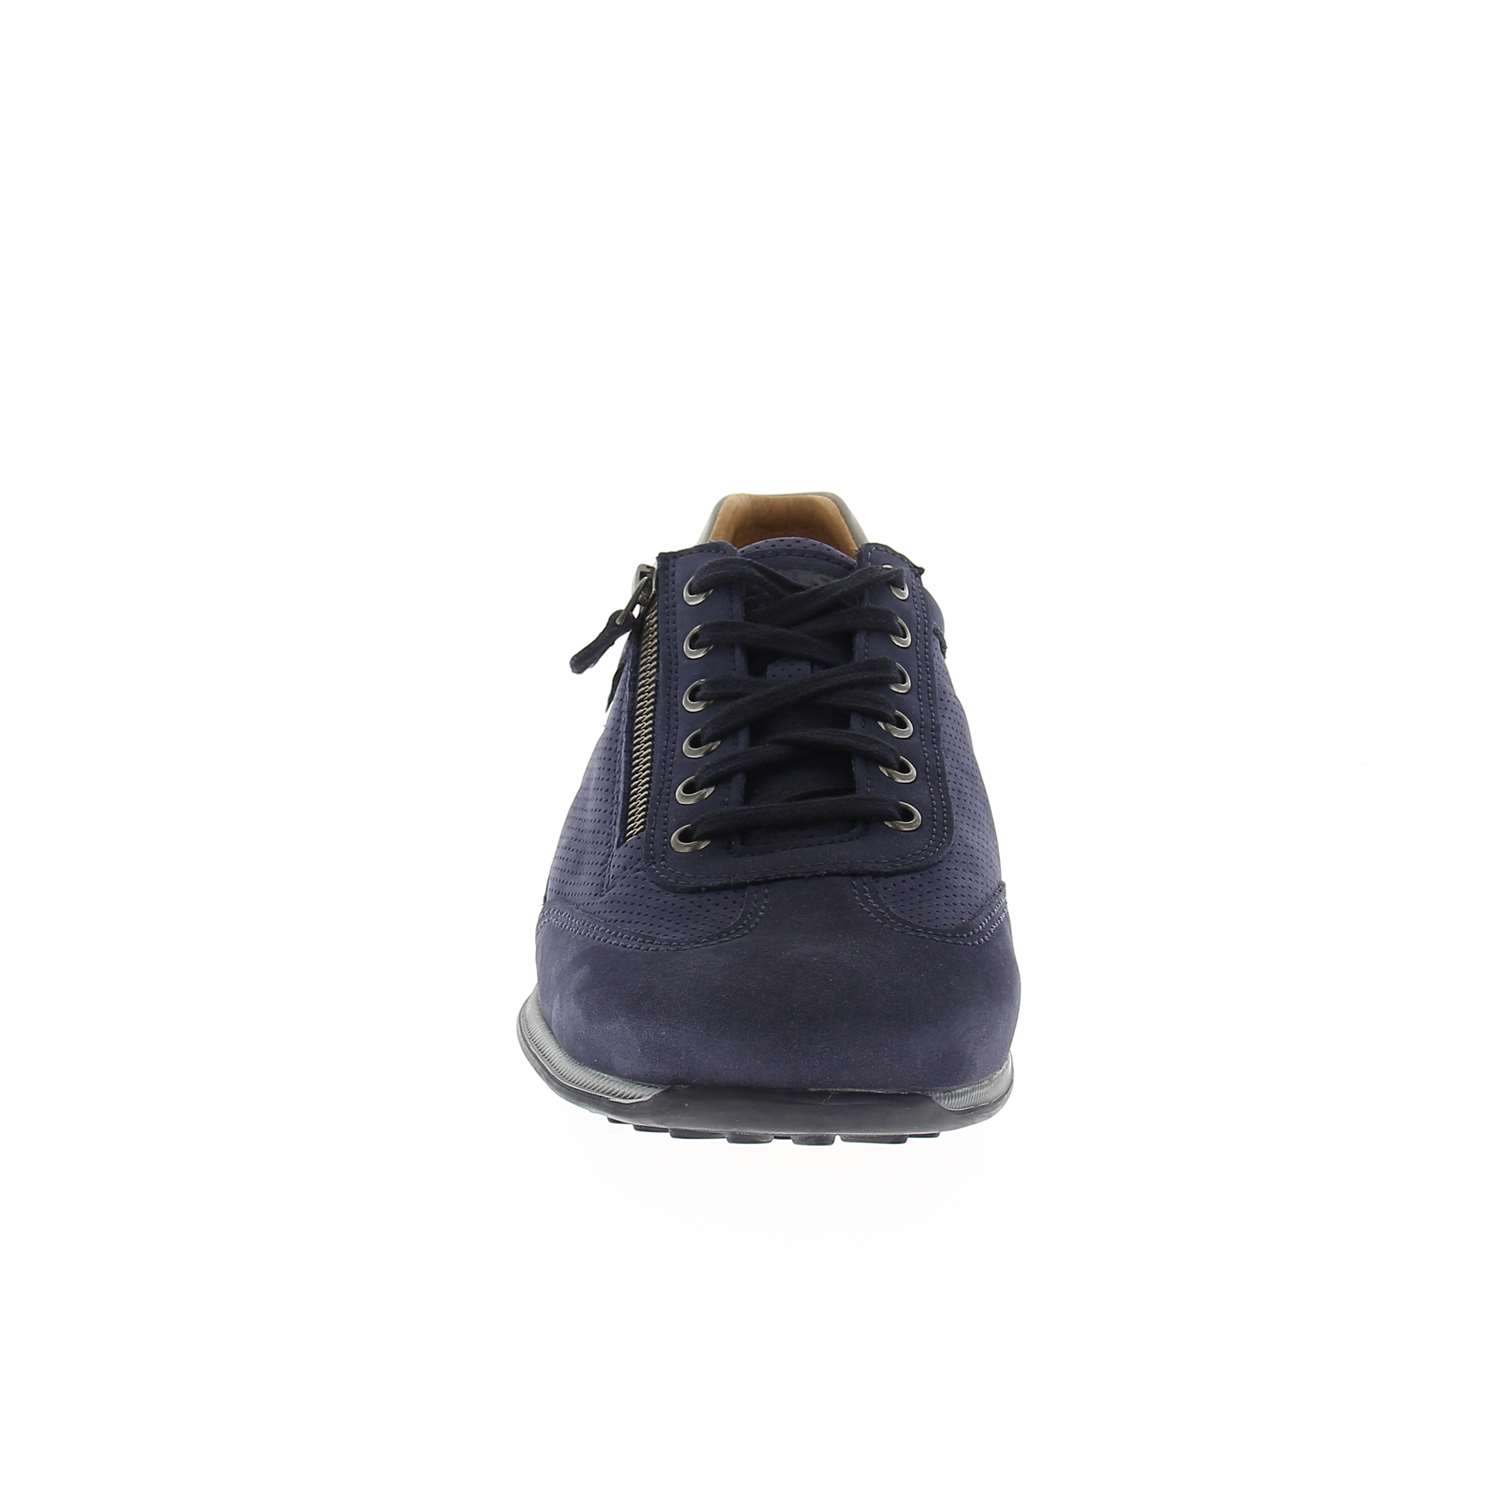 03 - LEON - MEPHISTO - Chaussures à lacets - Nubuck